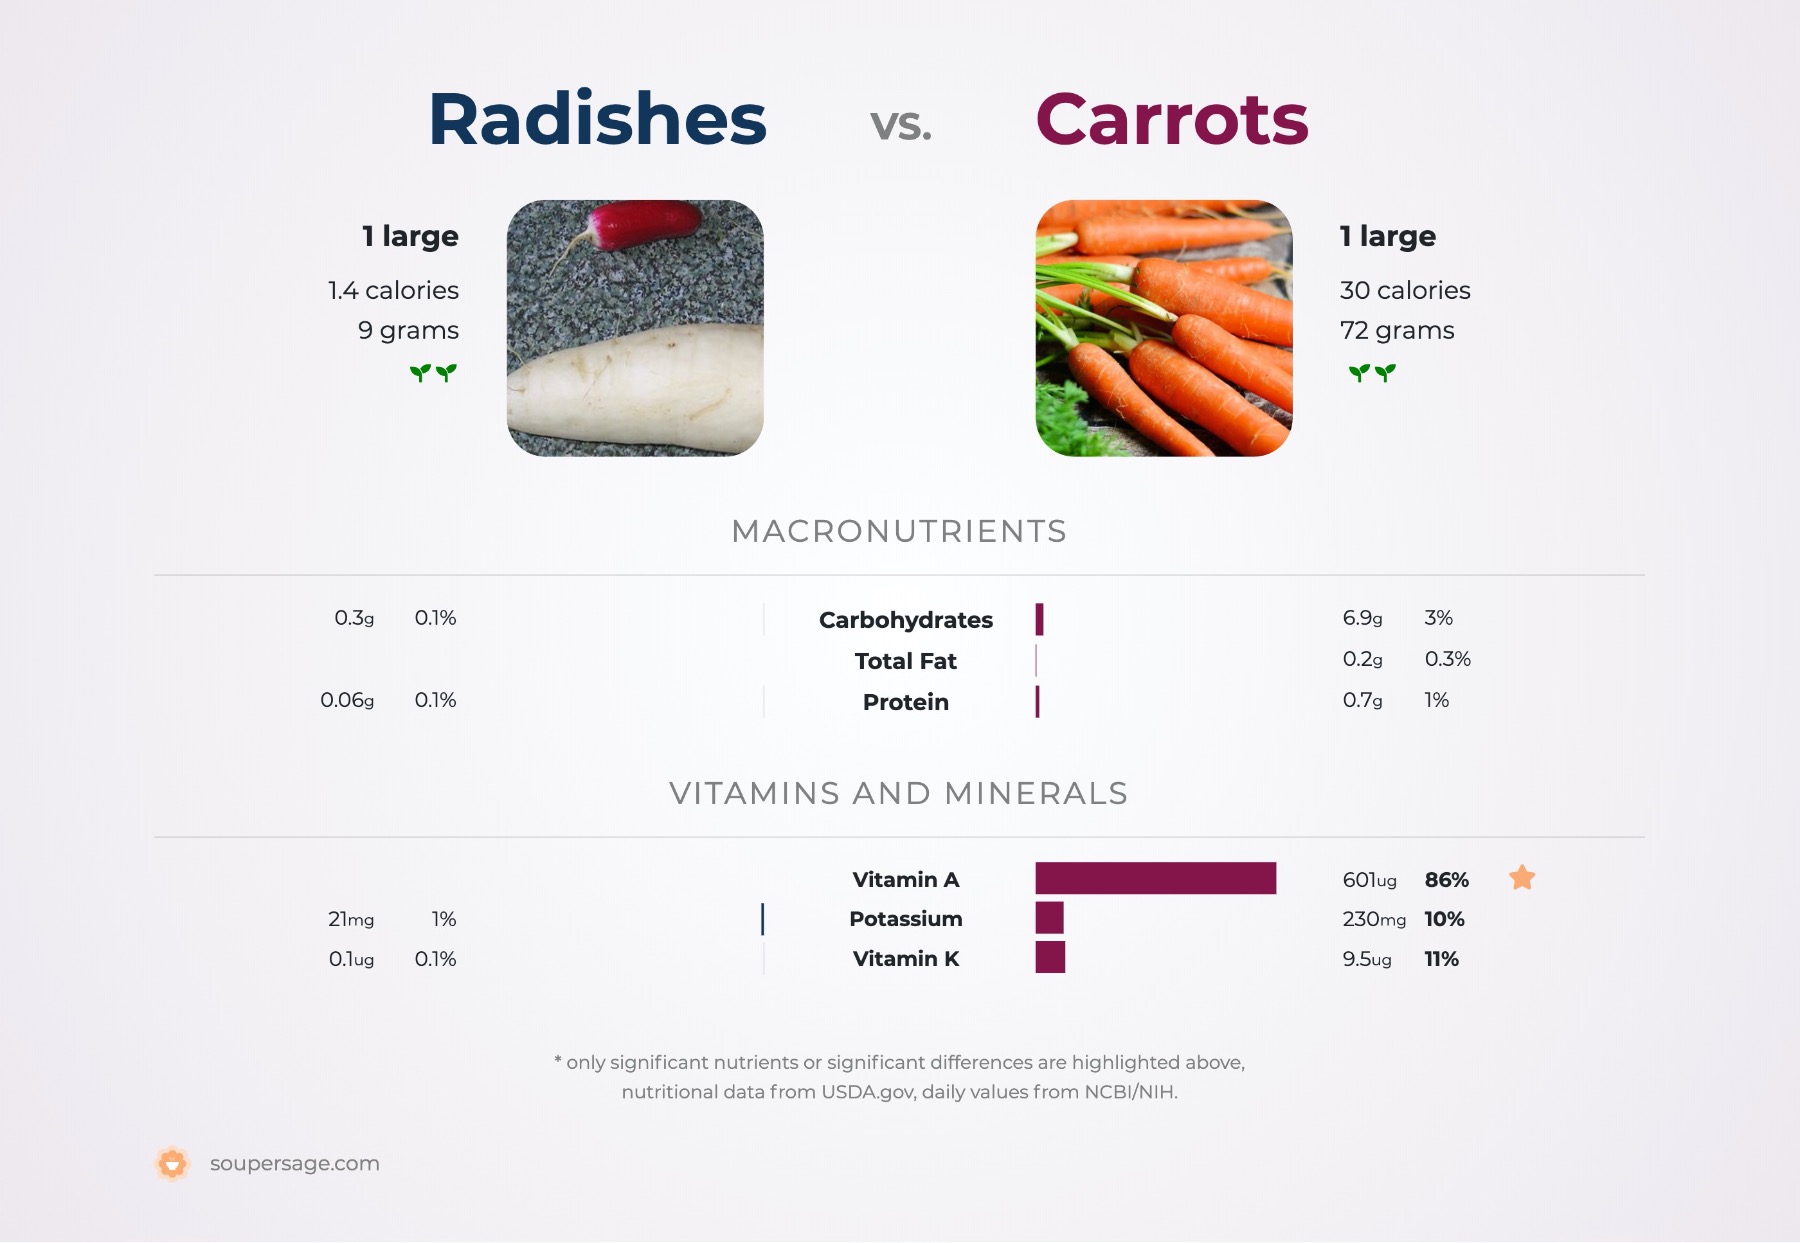 nutrition comparison of carrots vs. radishes